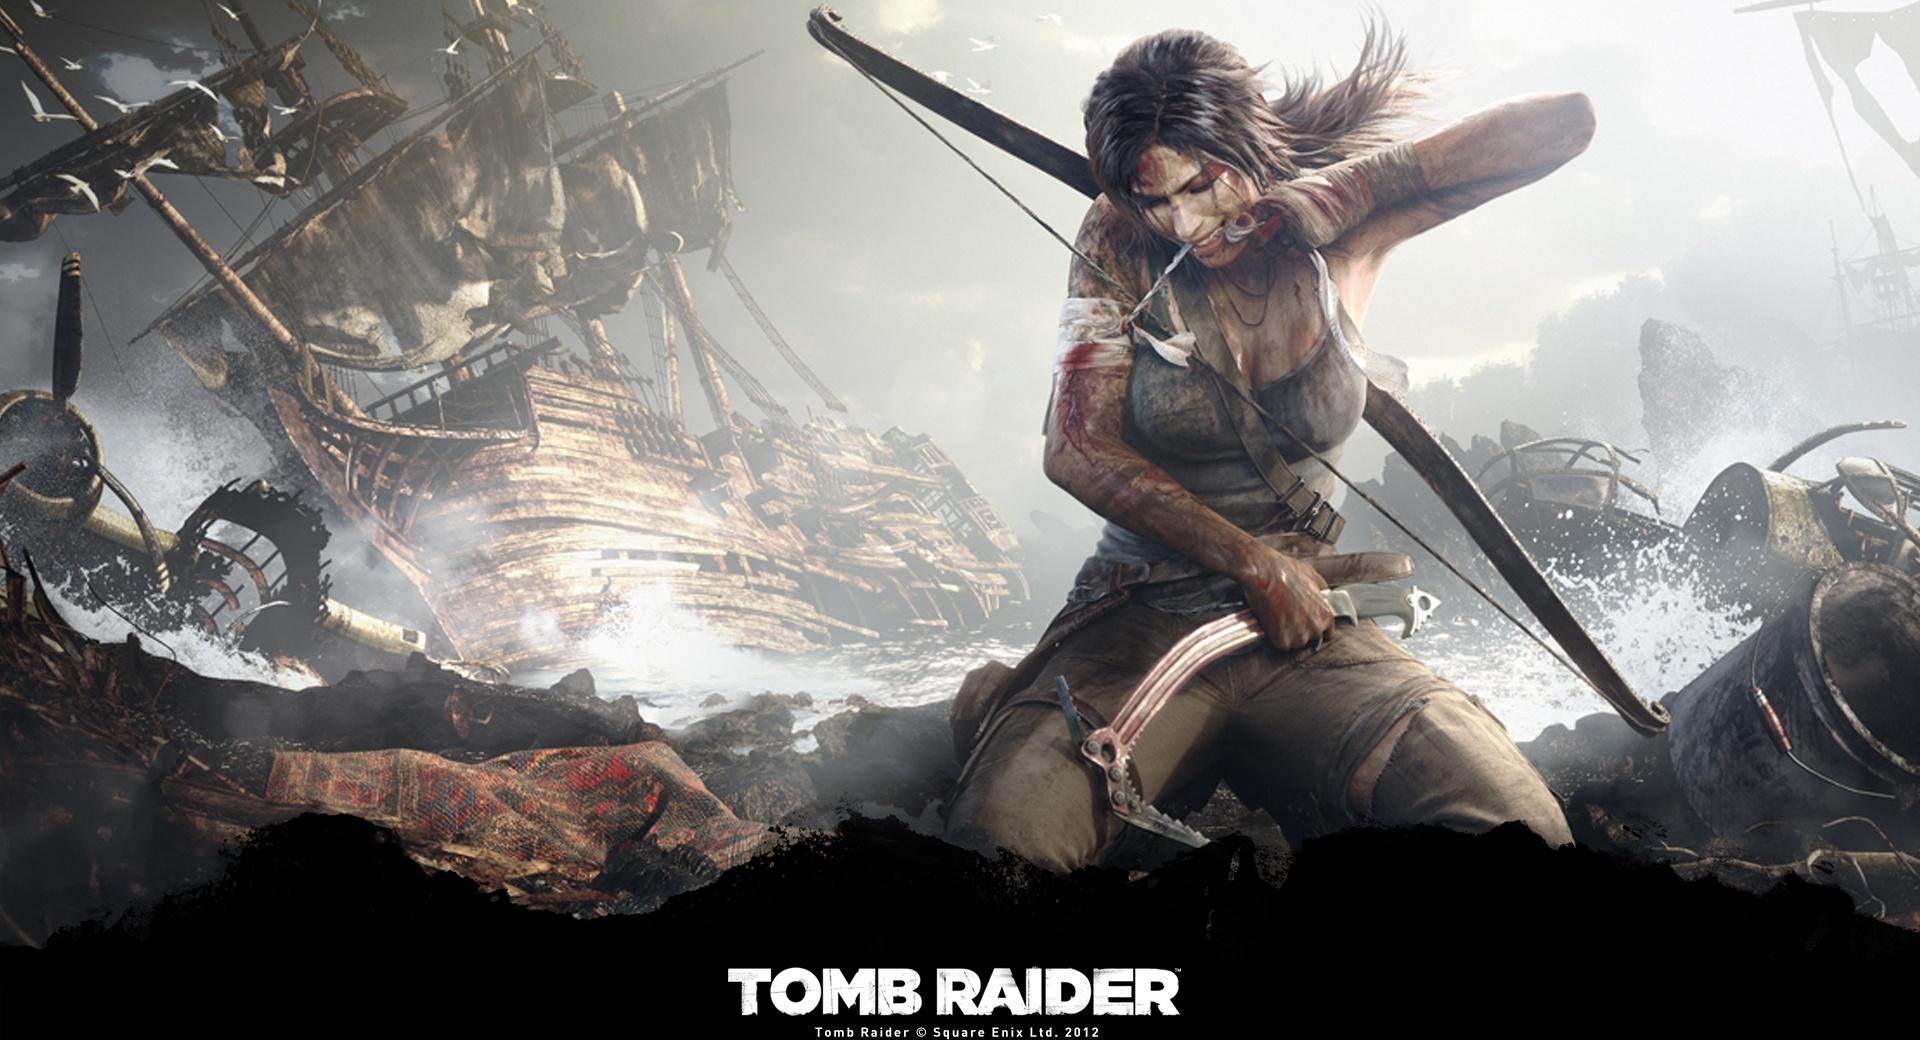 Tomb Raider Survivor (2013) at 1024 x 1024 iPad size wallpapers HD quality